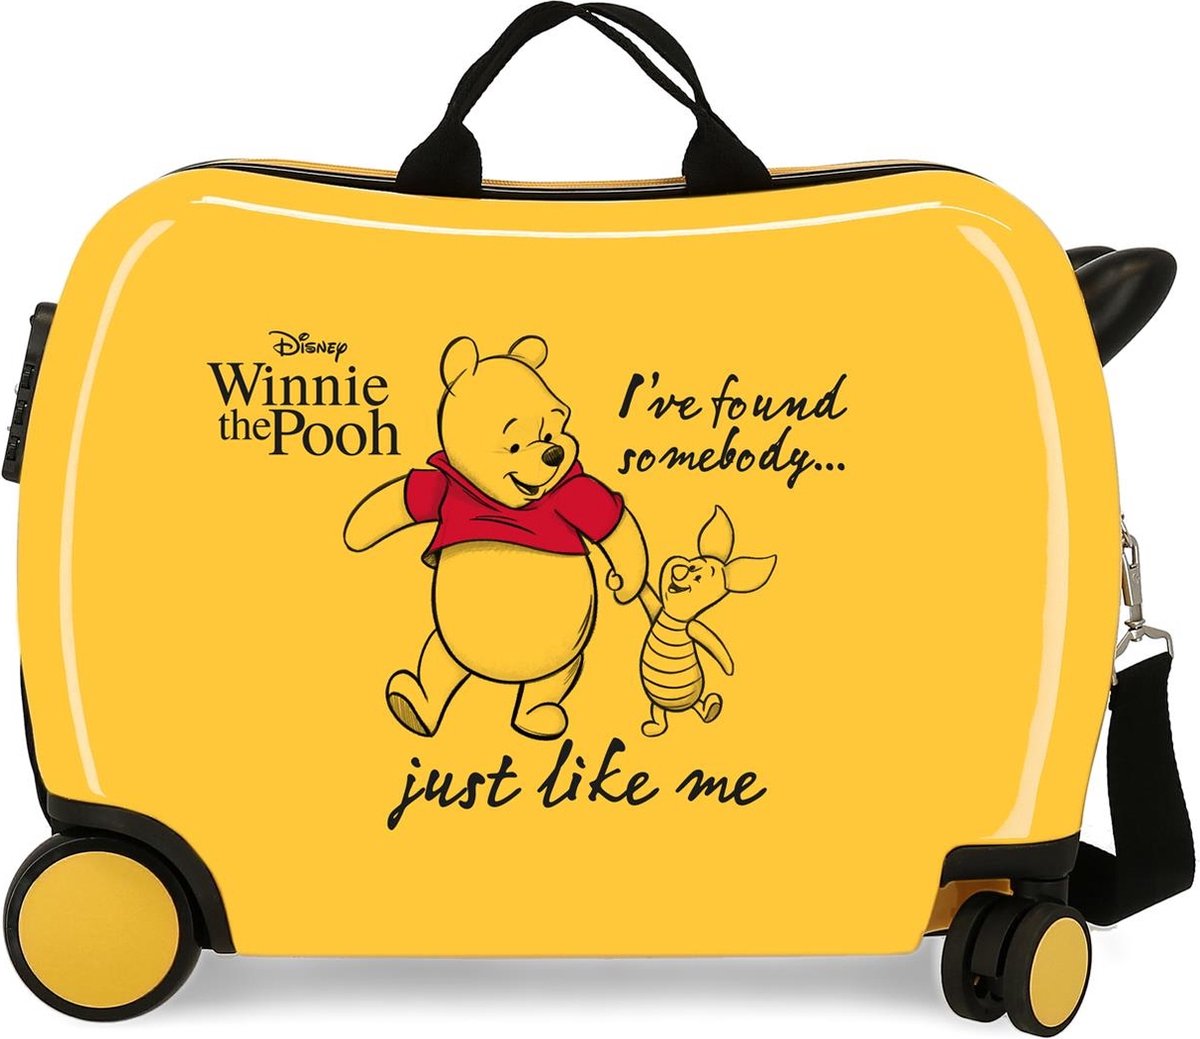 Disney Winnie the Pooh kinderkoffer ABS rol zit geel